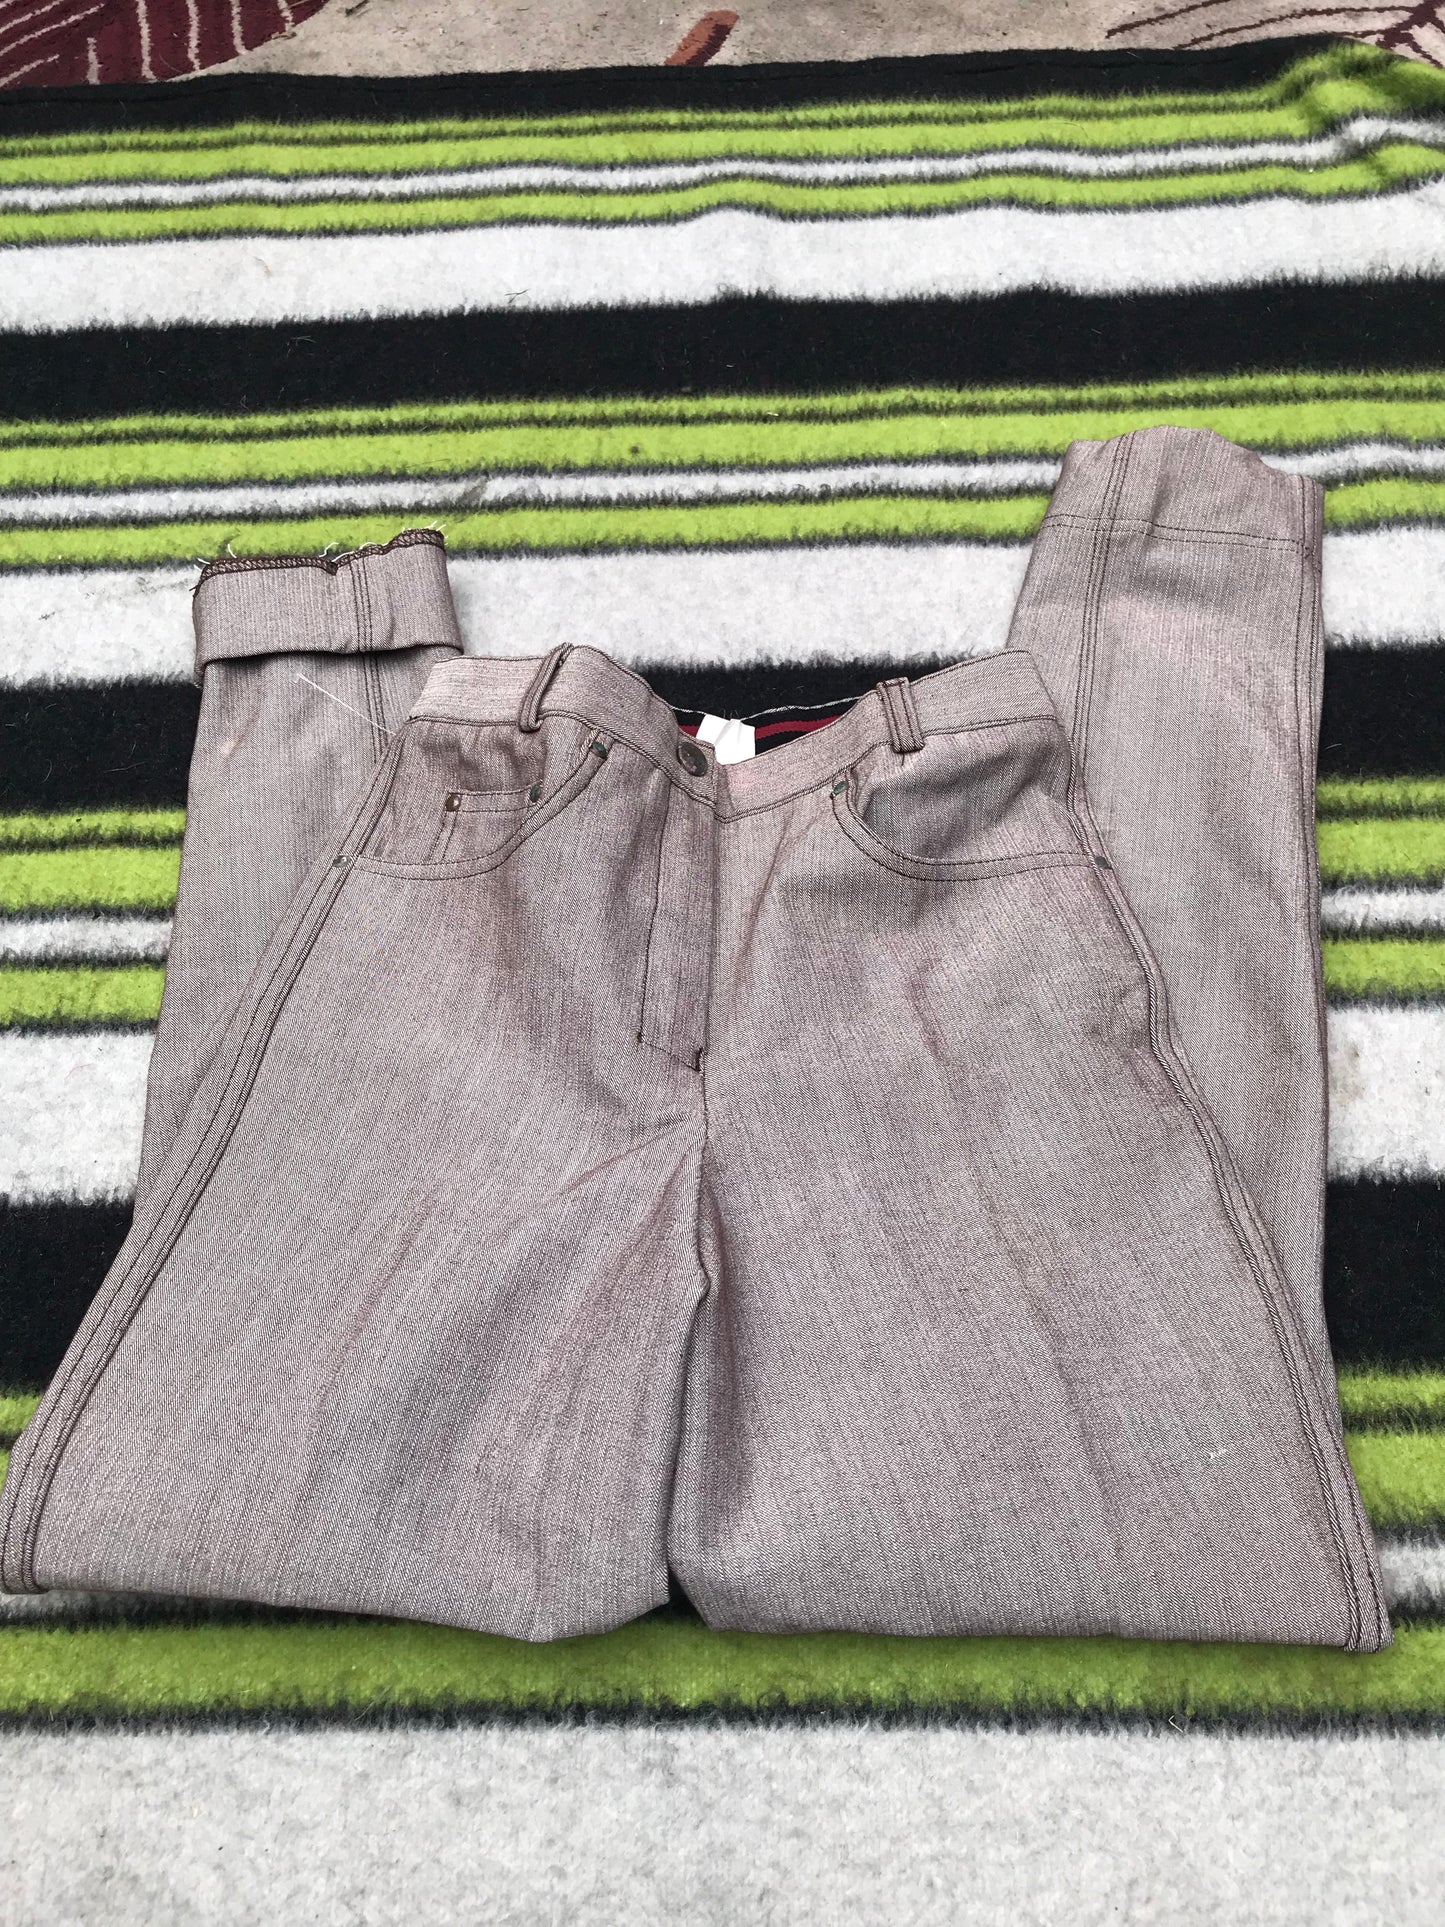 Koty grey denim look jodhpurs size 6 (24) regular FREE POSTAGE